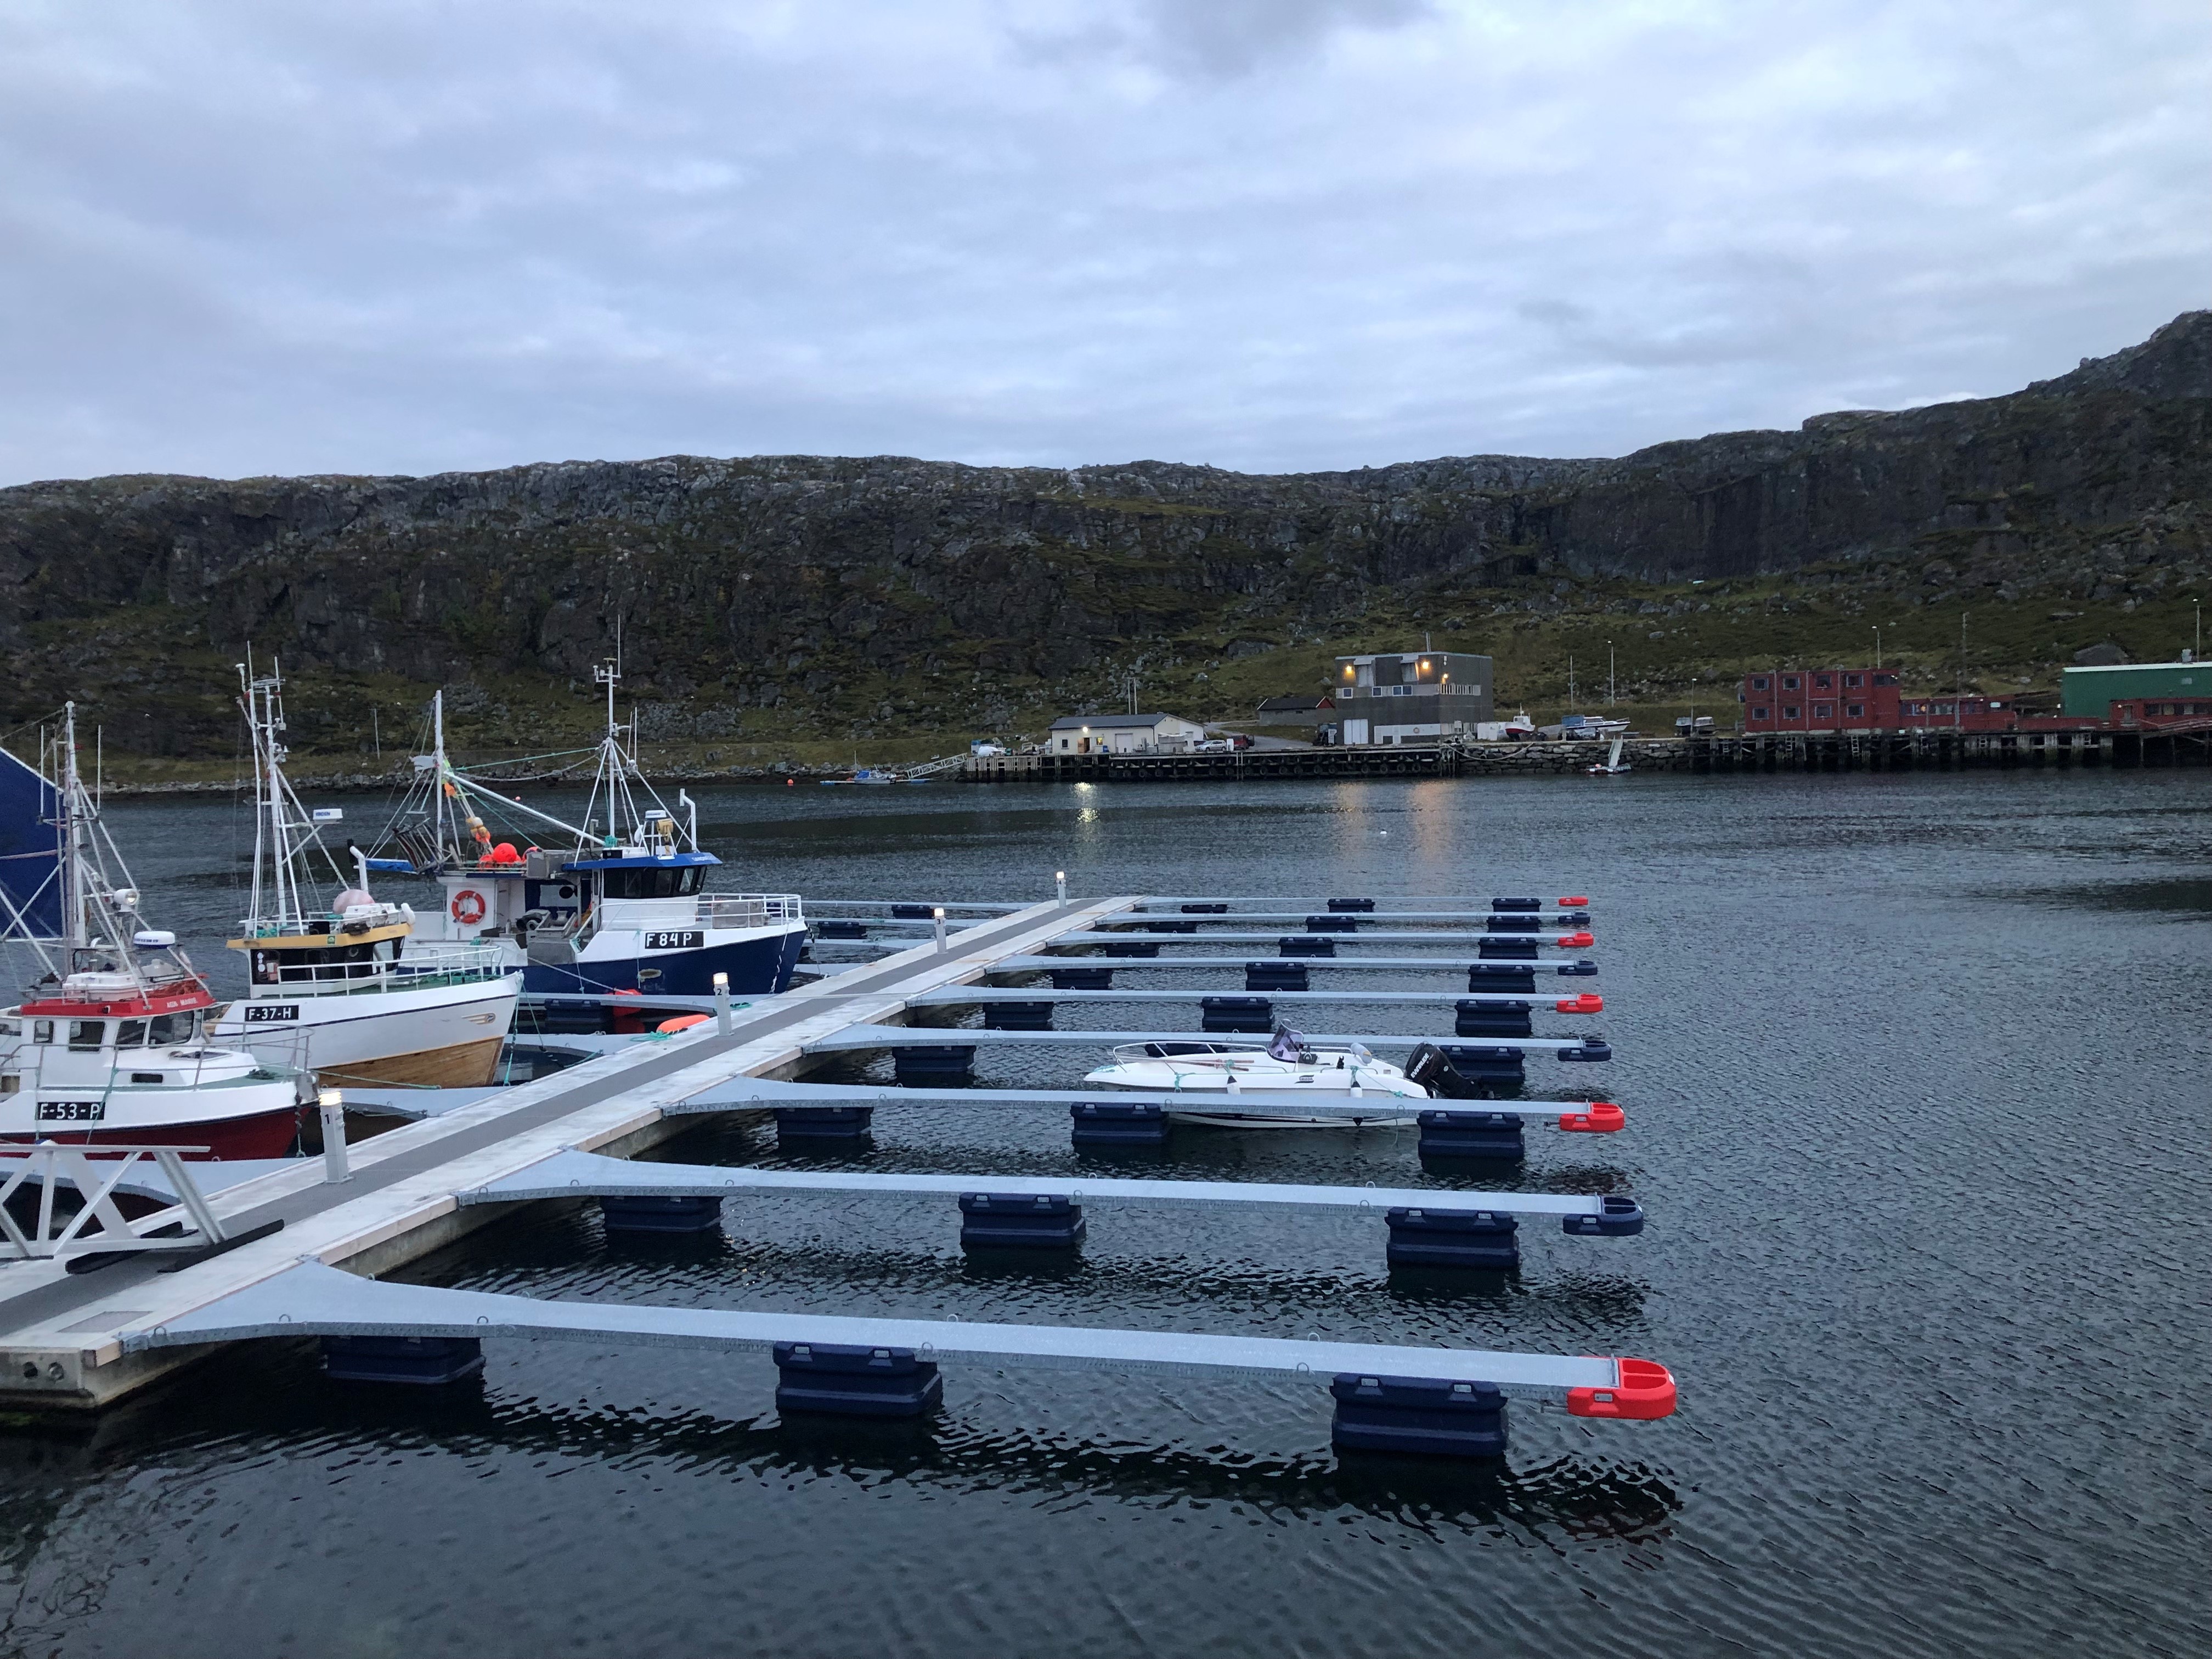 https://marinasolutions.no/uploads/Hammerfest-Havn-Forsøl-fiskerihavn-bilde-tatt-september-2019002-4.jpg